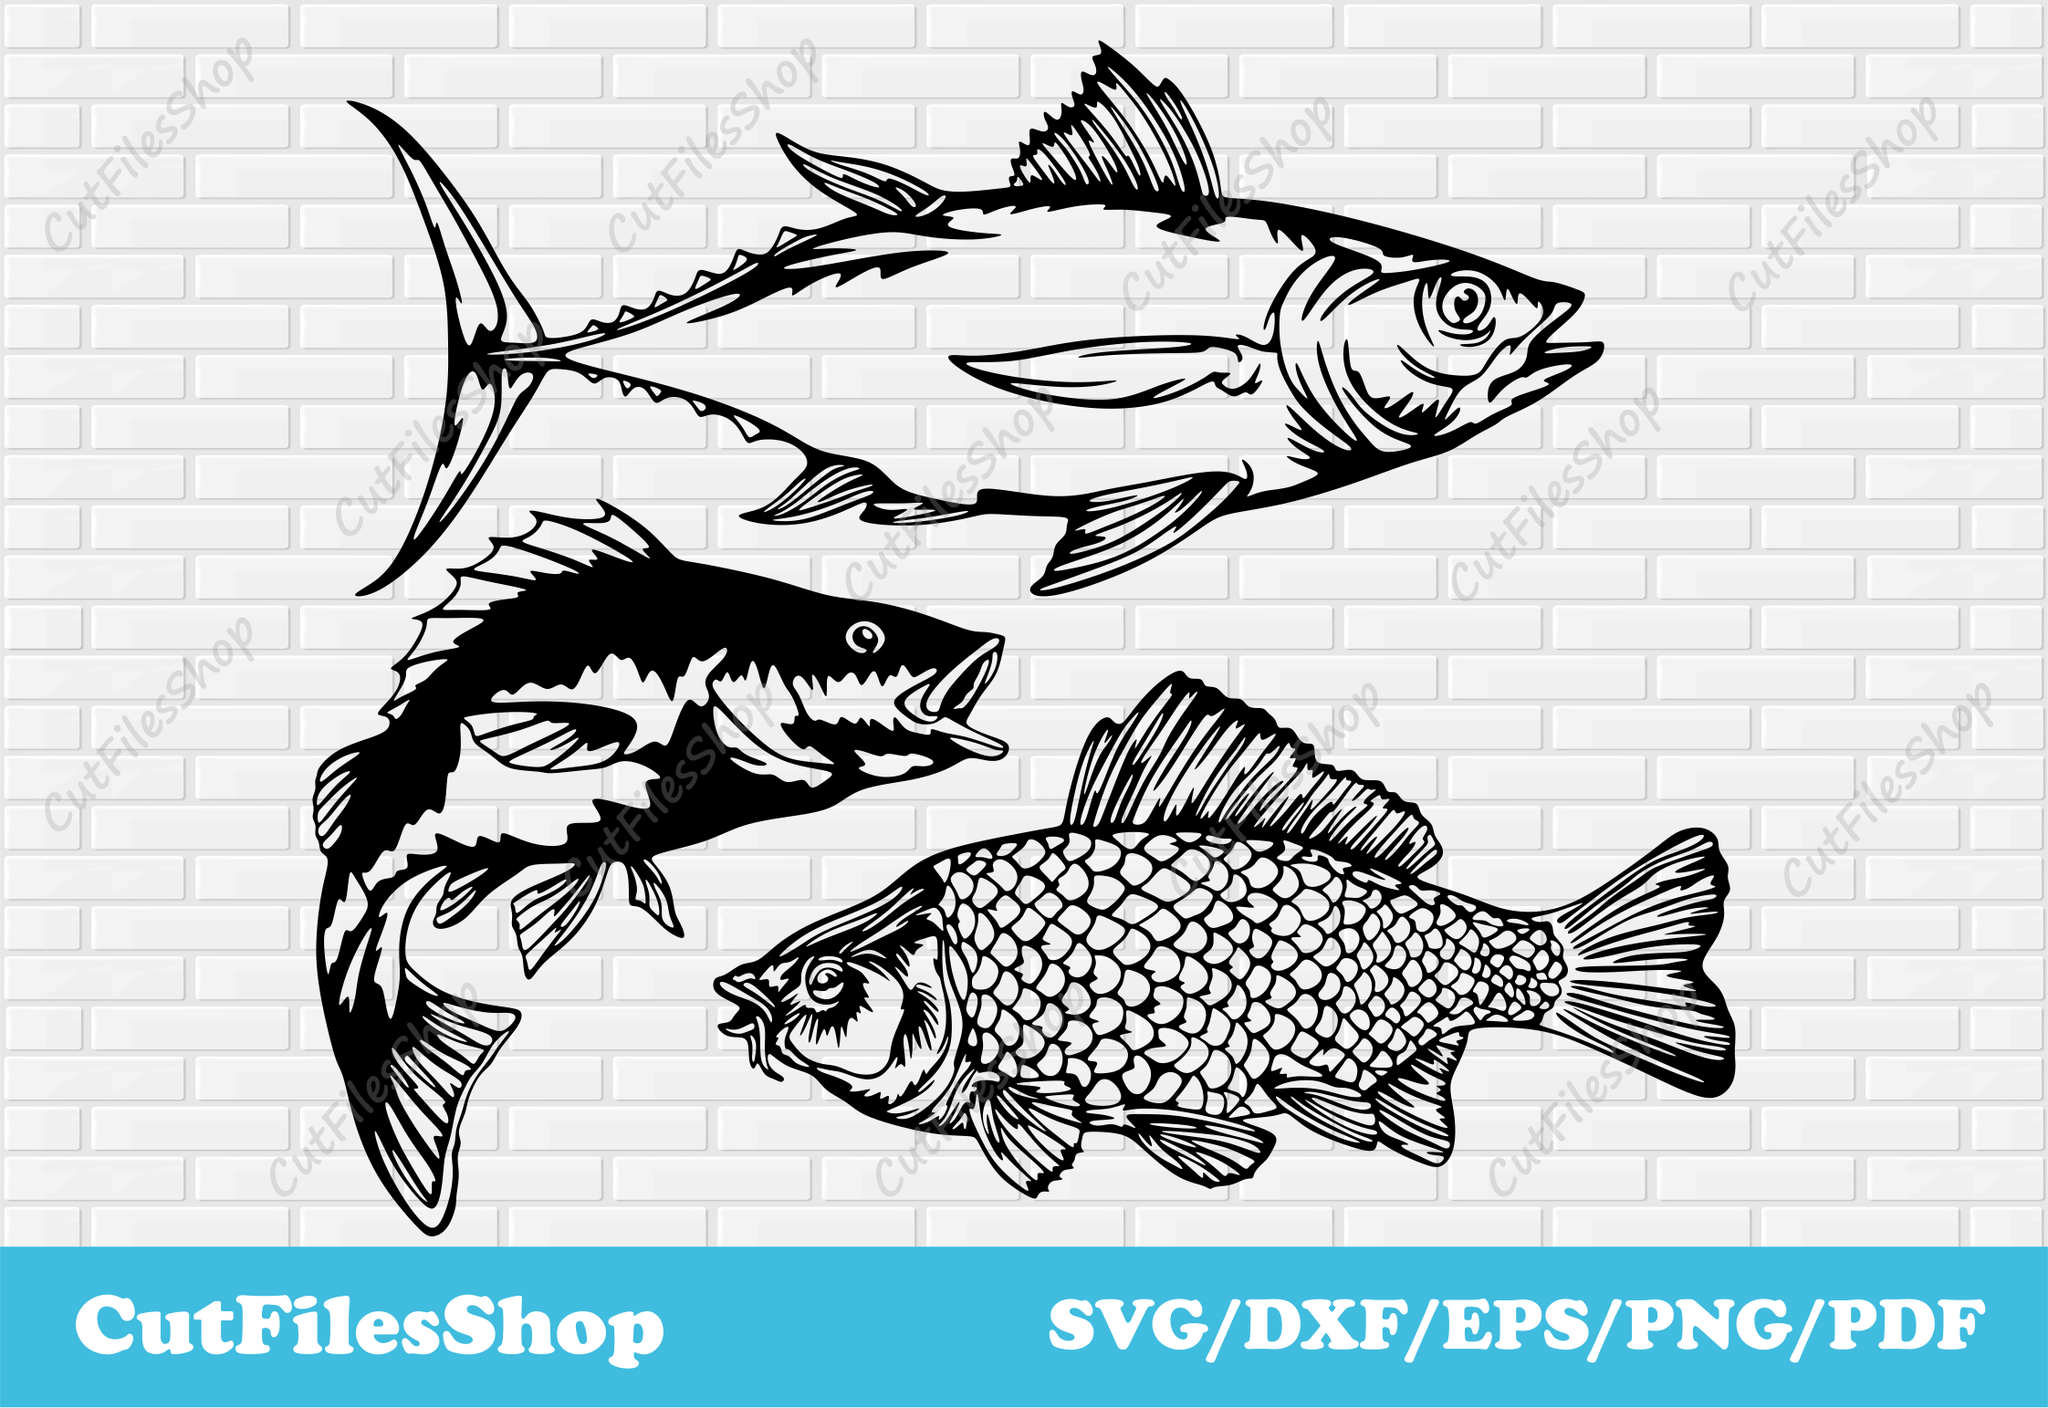 Fish svg cut file, svg files for fishing, cricut files download